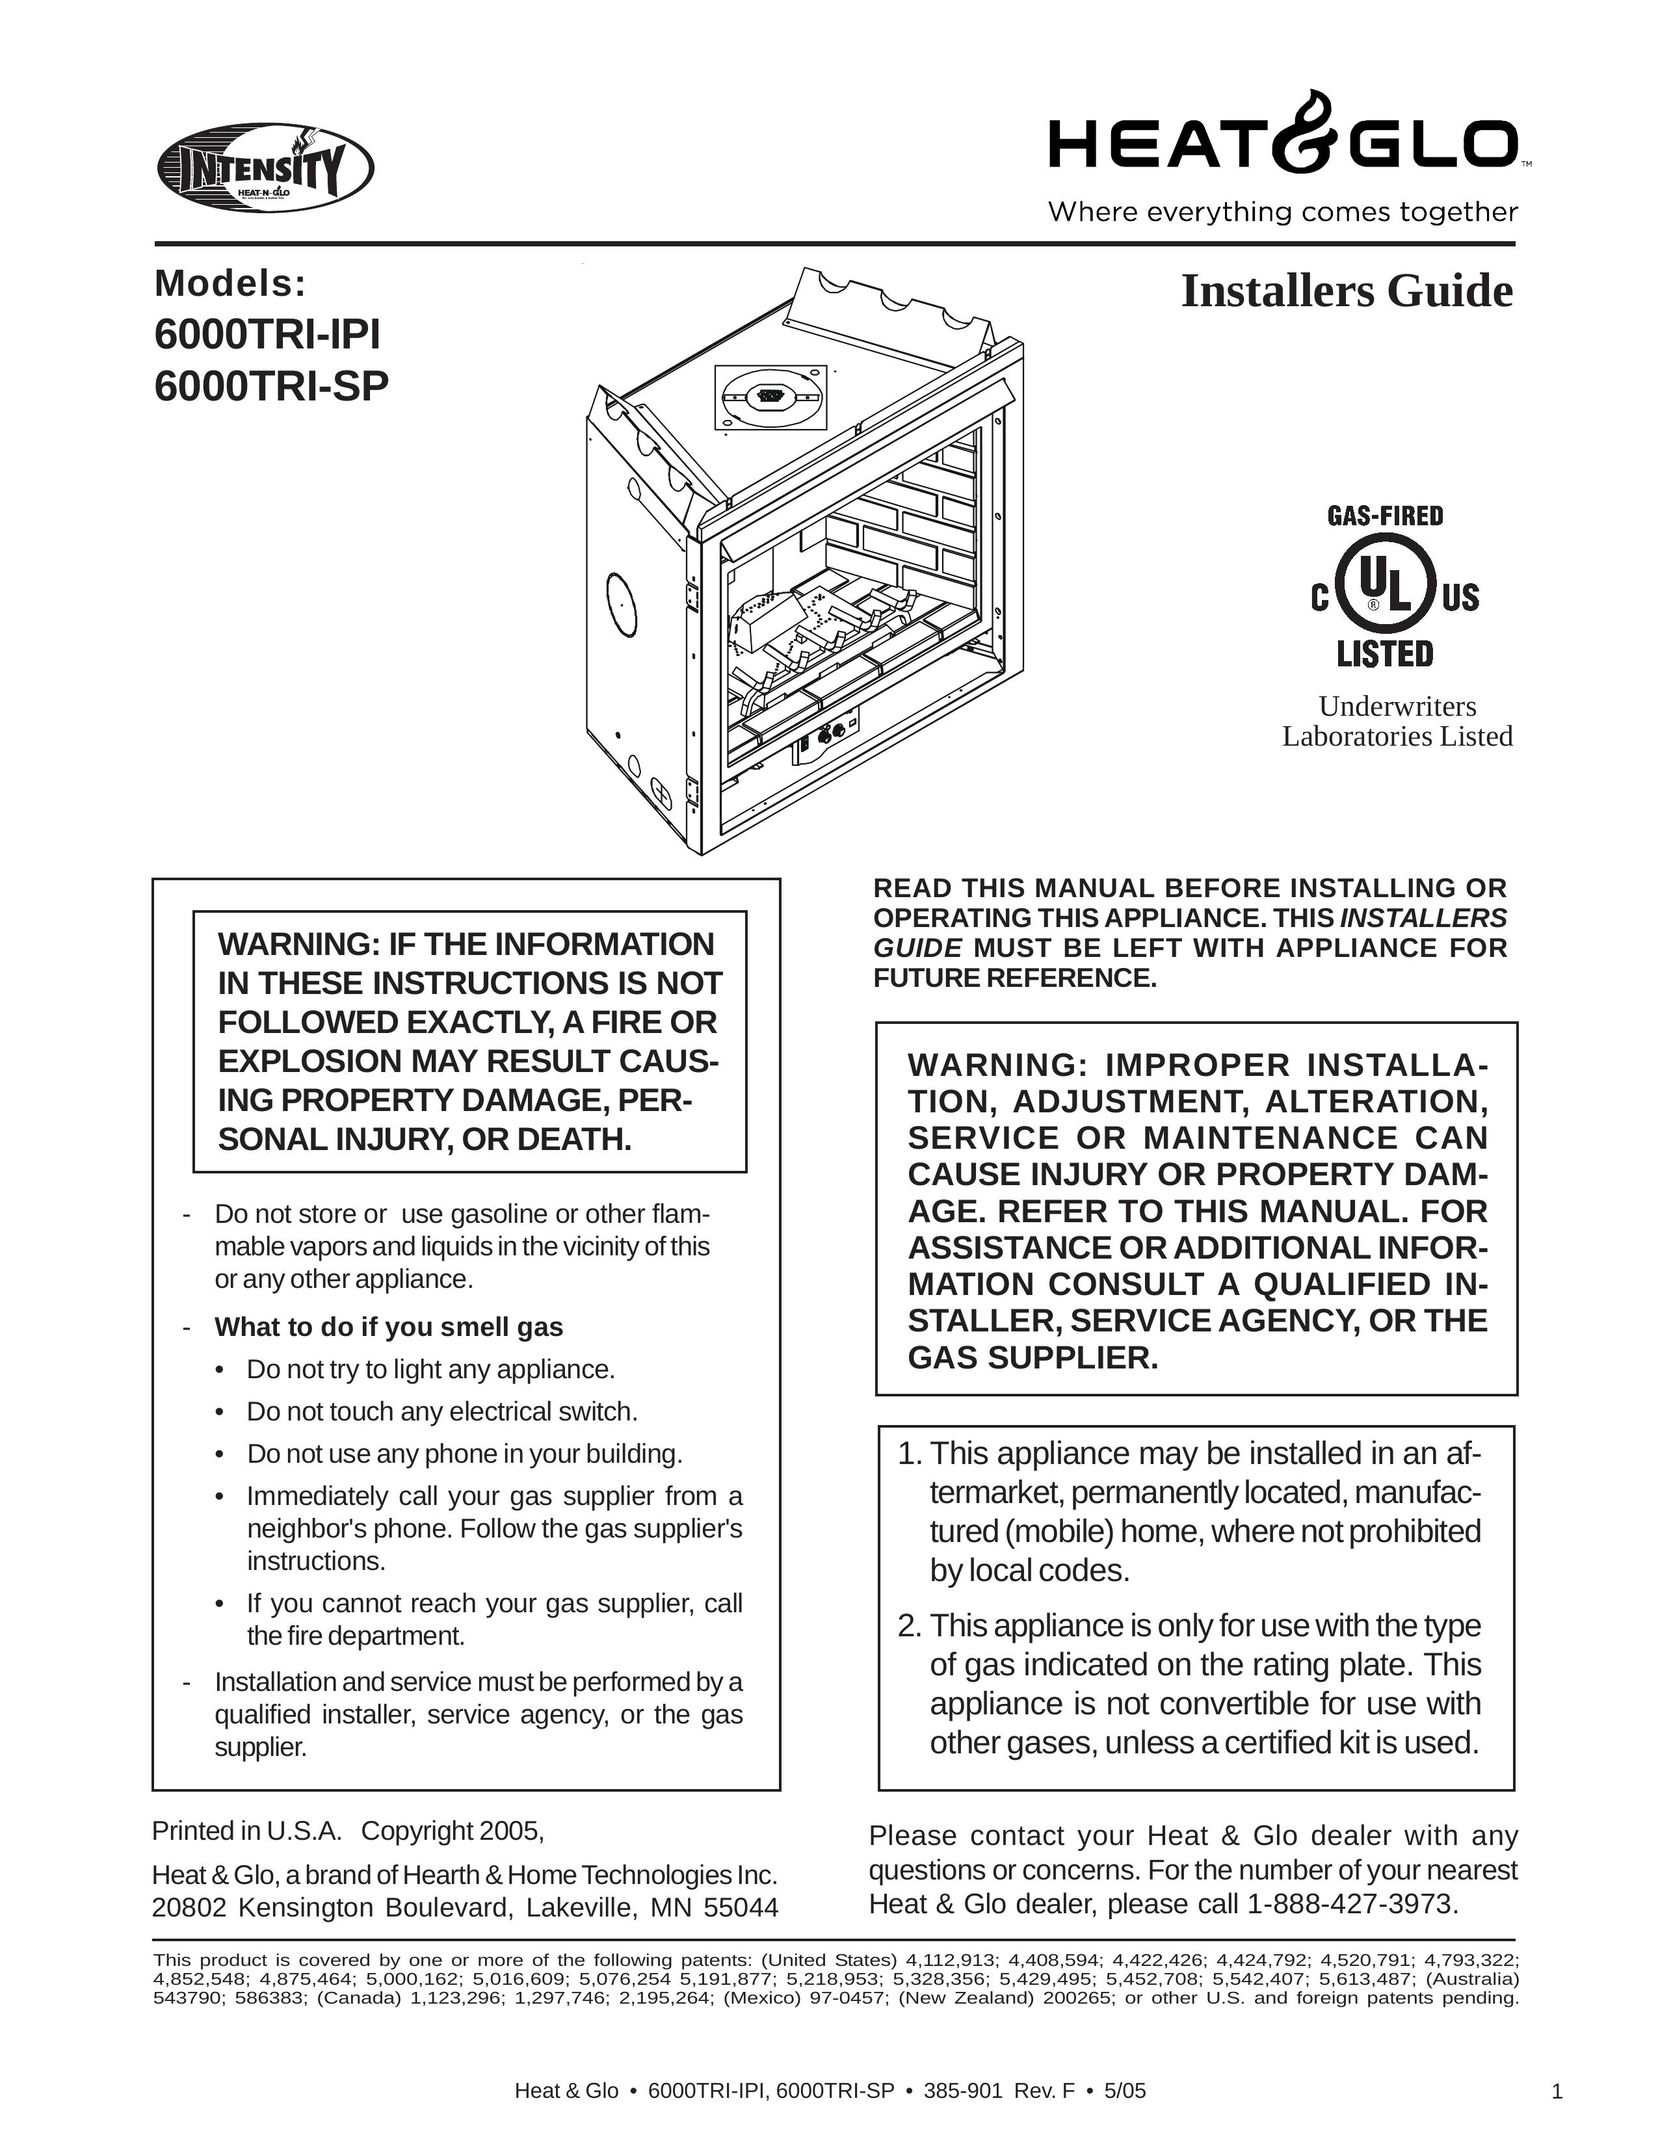 Heat & Glo LifeStyle 6000TRI-IPI Indoor Fireplace User Manual